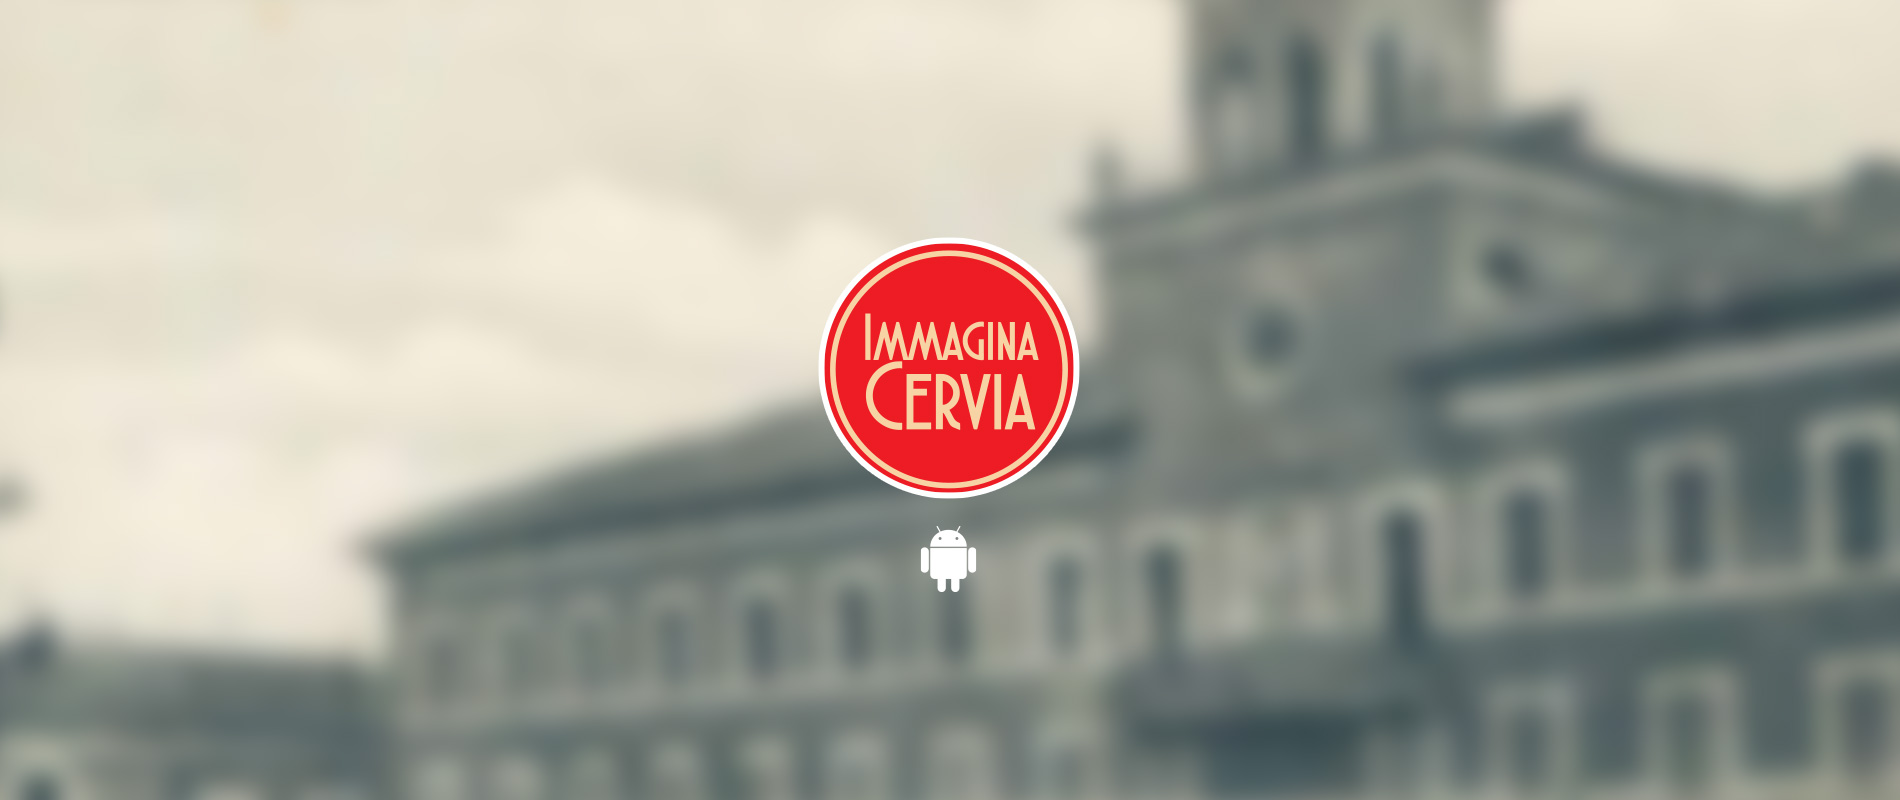 Immagina Cervia mobile app